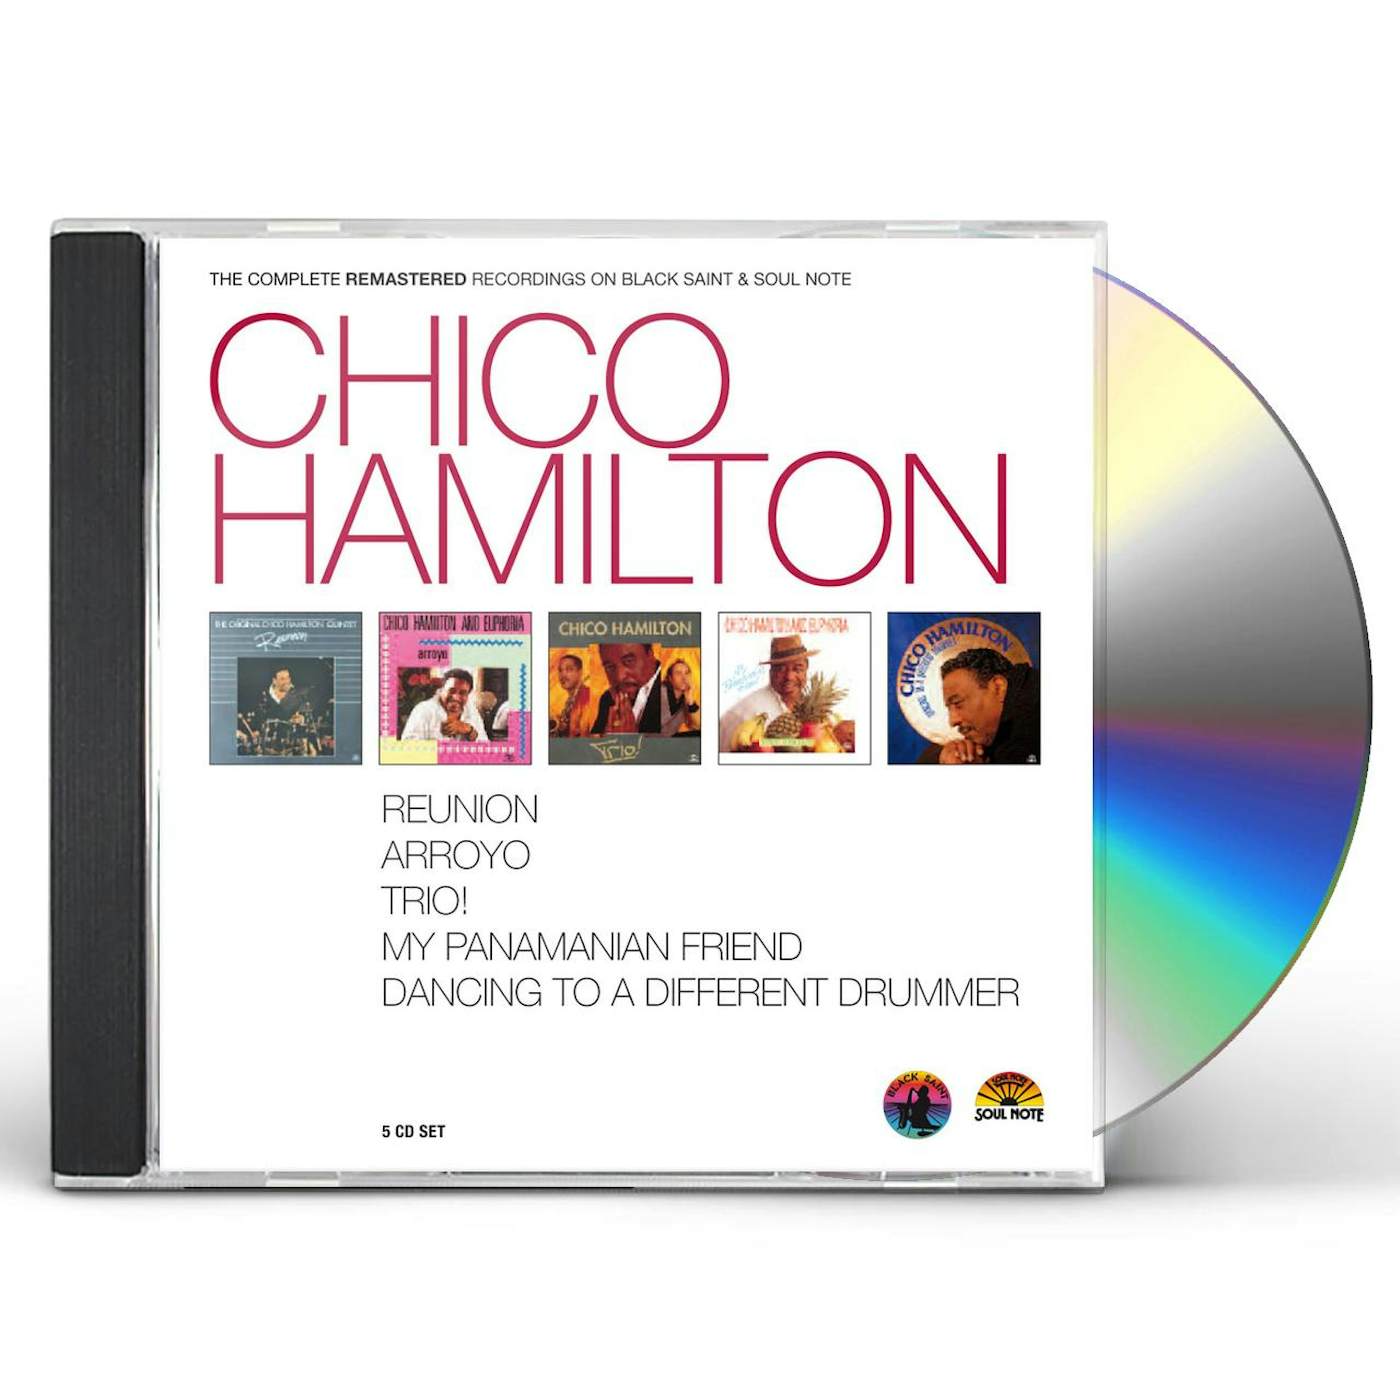 Chico Hamilton COMPLETE REMASTERED RECORDINGS ON BLACK SAINT & SO CD